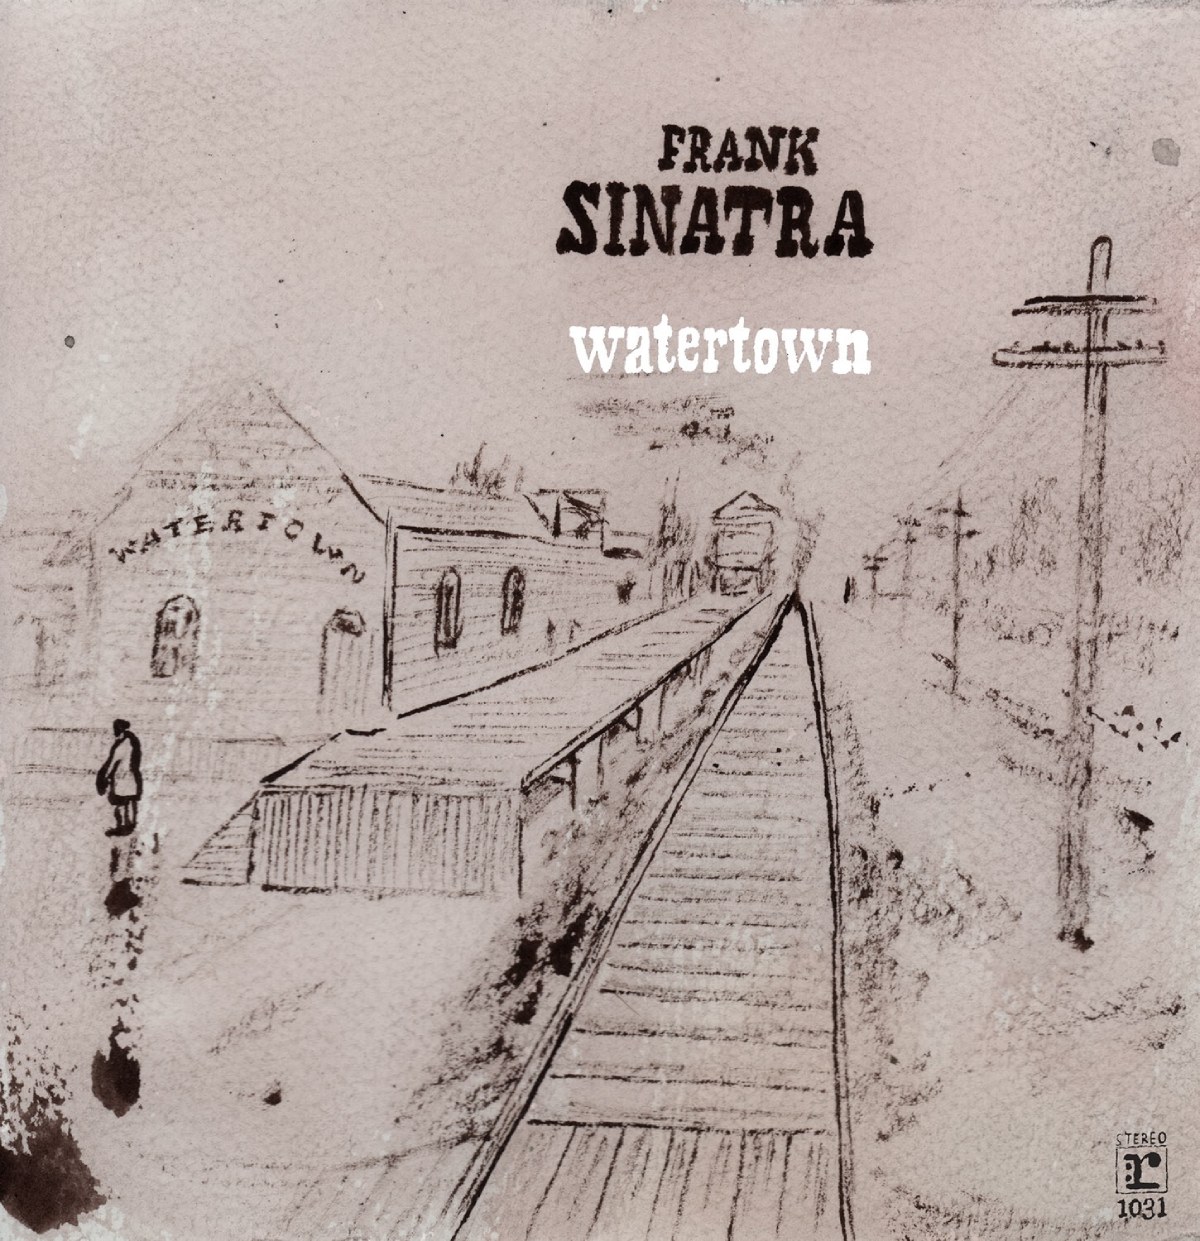 Frank Sinatra: Watertown (capa do álbum)